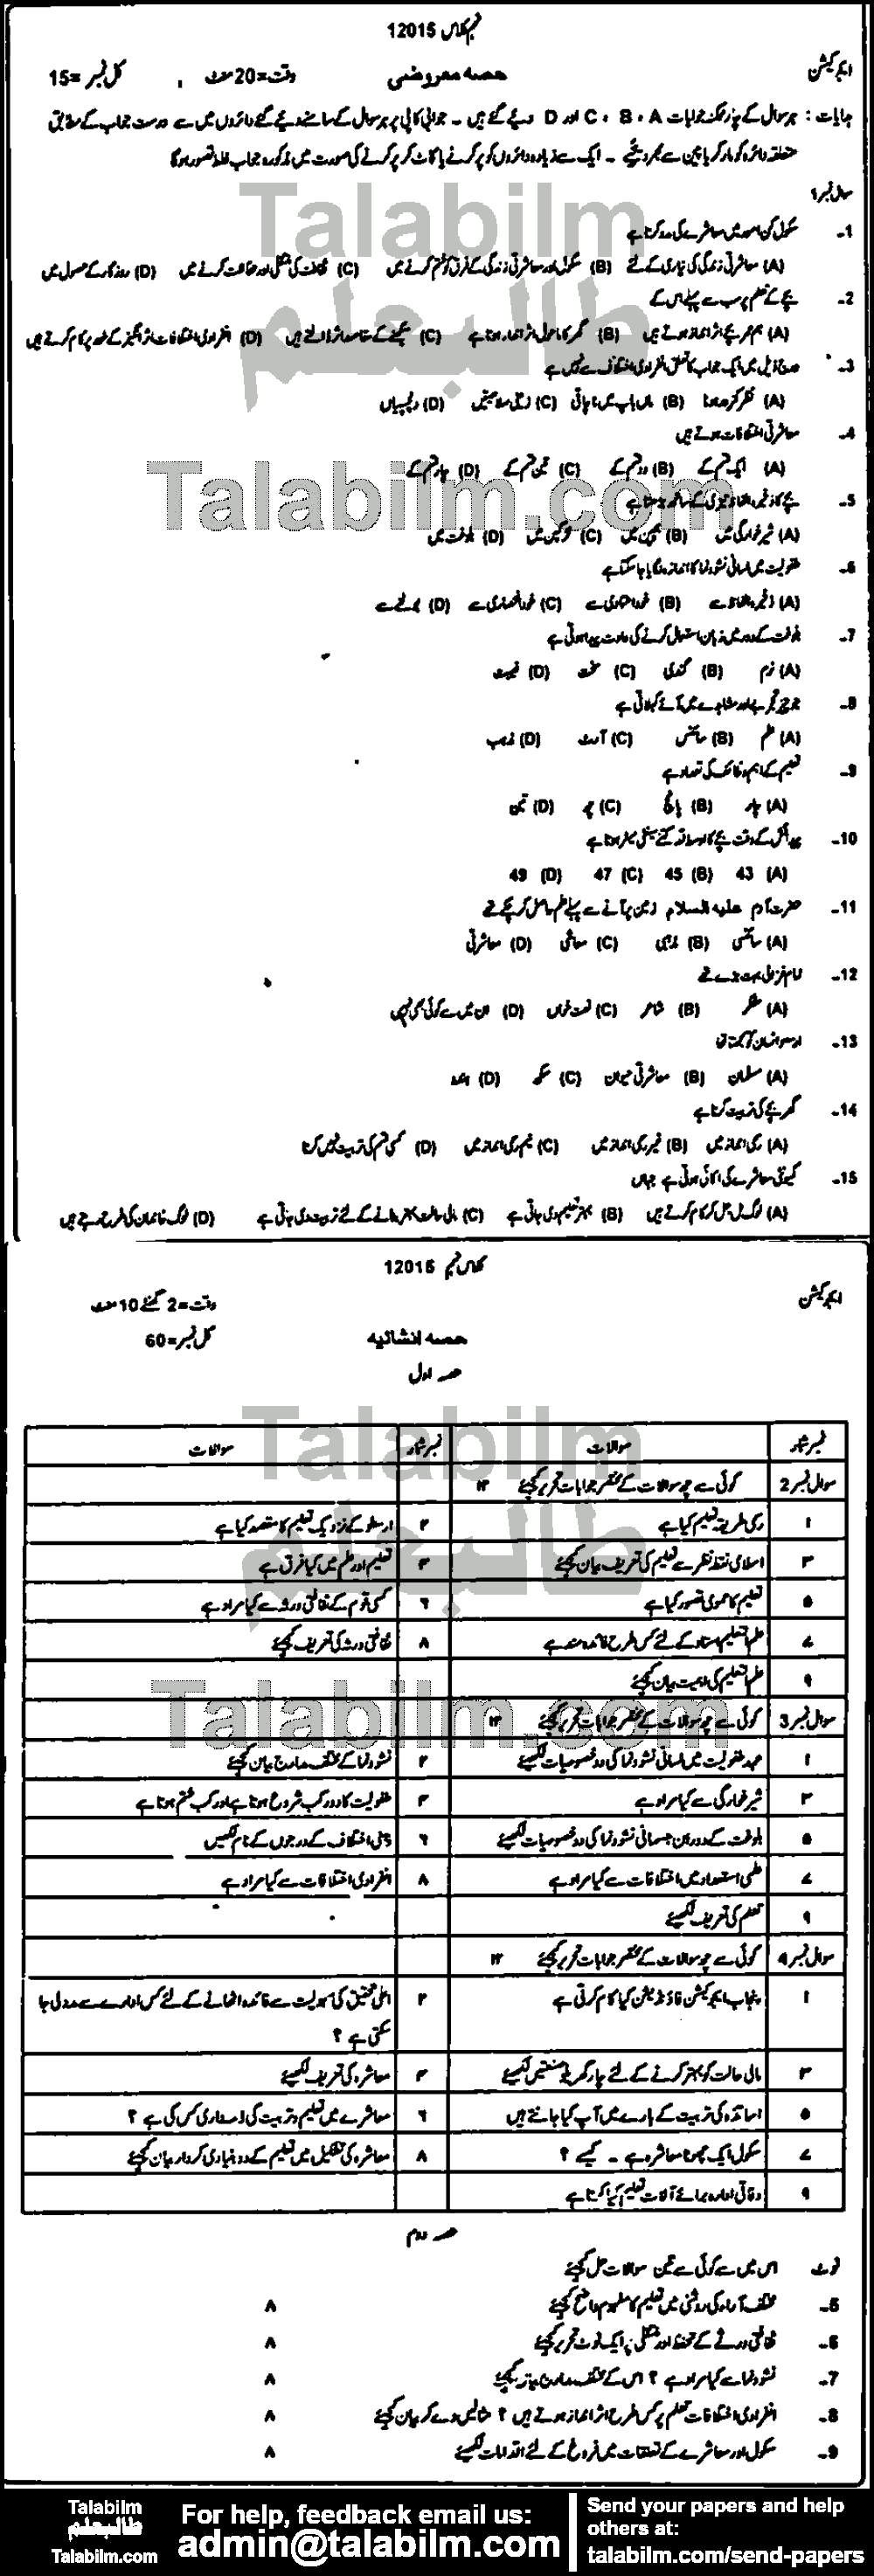 Education 0 past paper for Urdu Medium 2015 Group-I